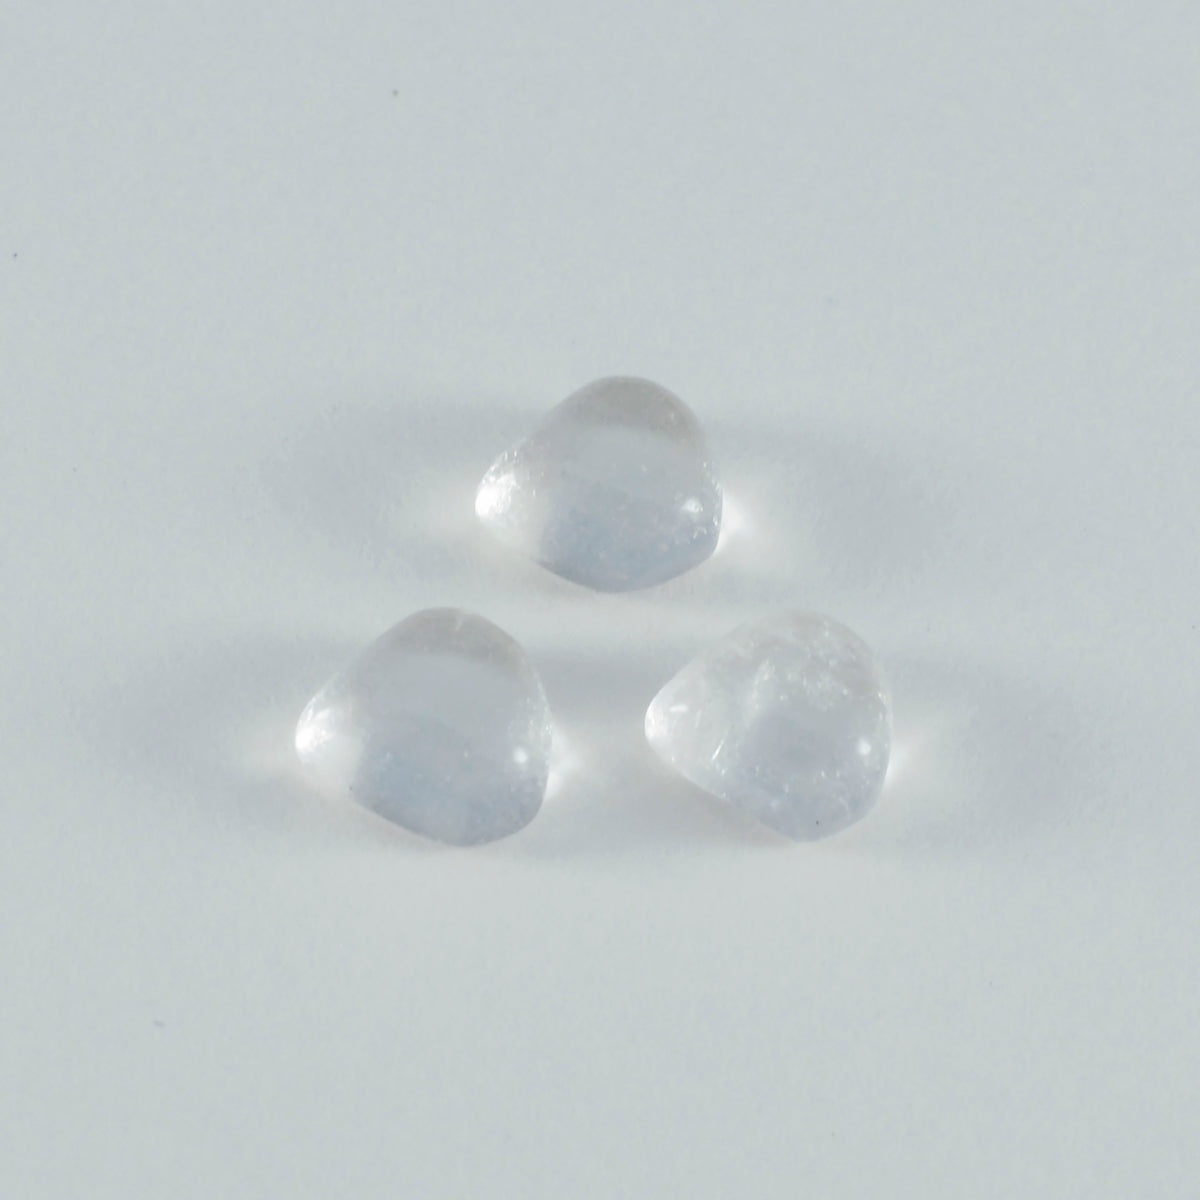 Riyogems 1PC White Crystal Quartz Cabochon 14x14 mm Heart Shape A+1 Quality Gemstone